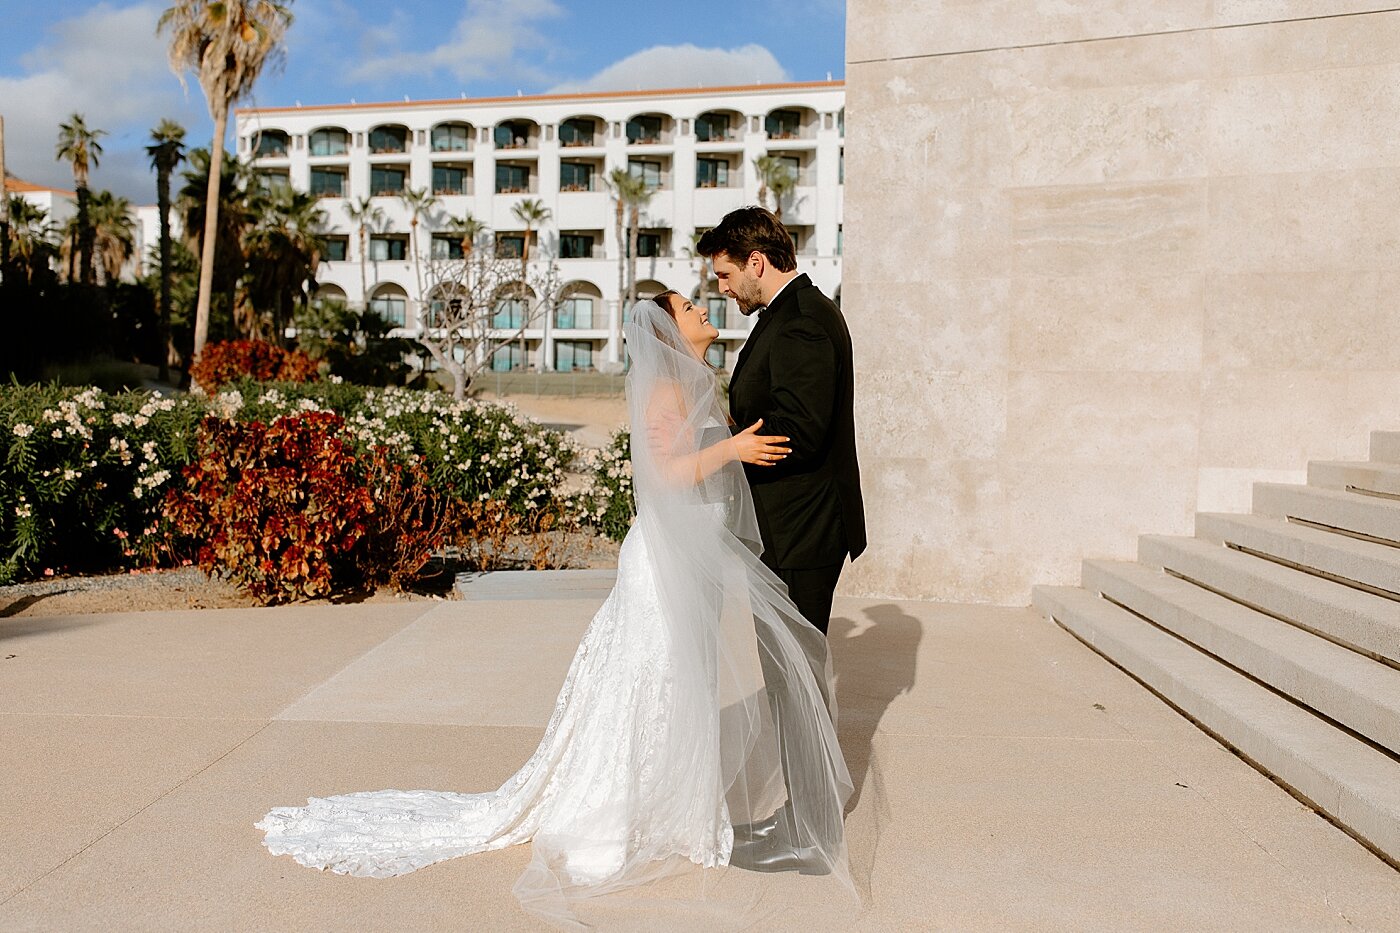 San Jose del Cabo Mexico Destination Wedding Photography captured by Southern California Wedding Photographer Carmen Lopez Photography